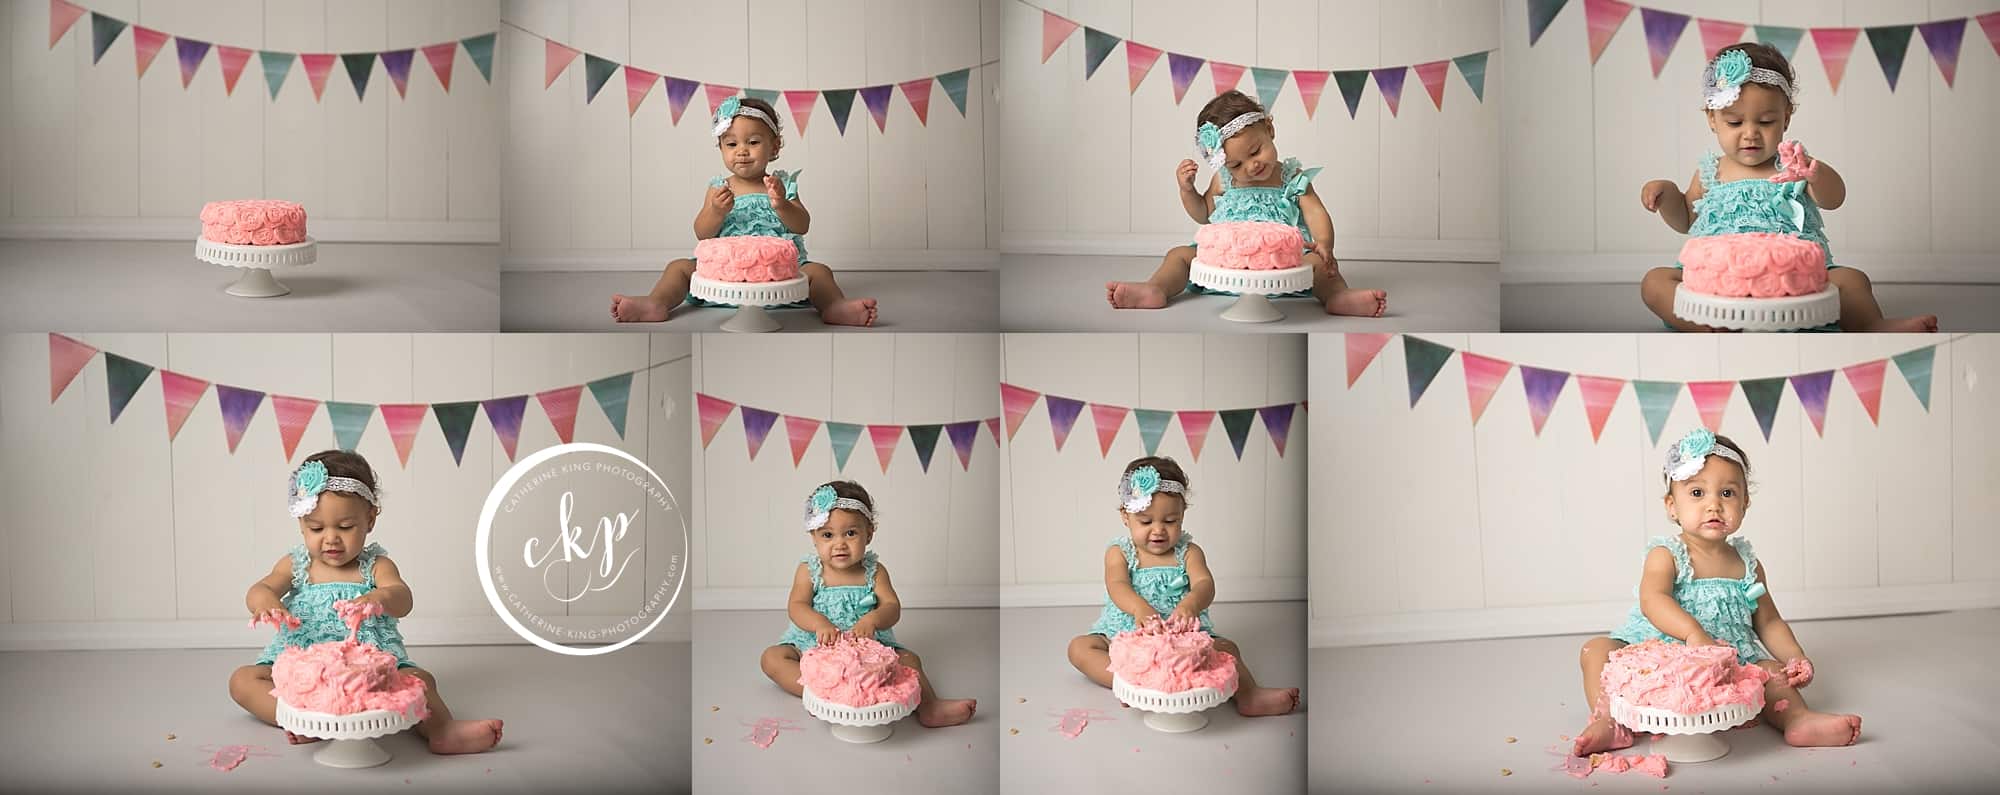 Nalias smashcake first birthday photography session with catherine king photography a madison ct baby photographer